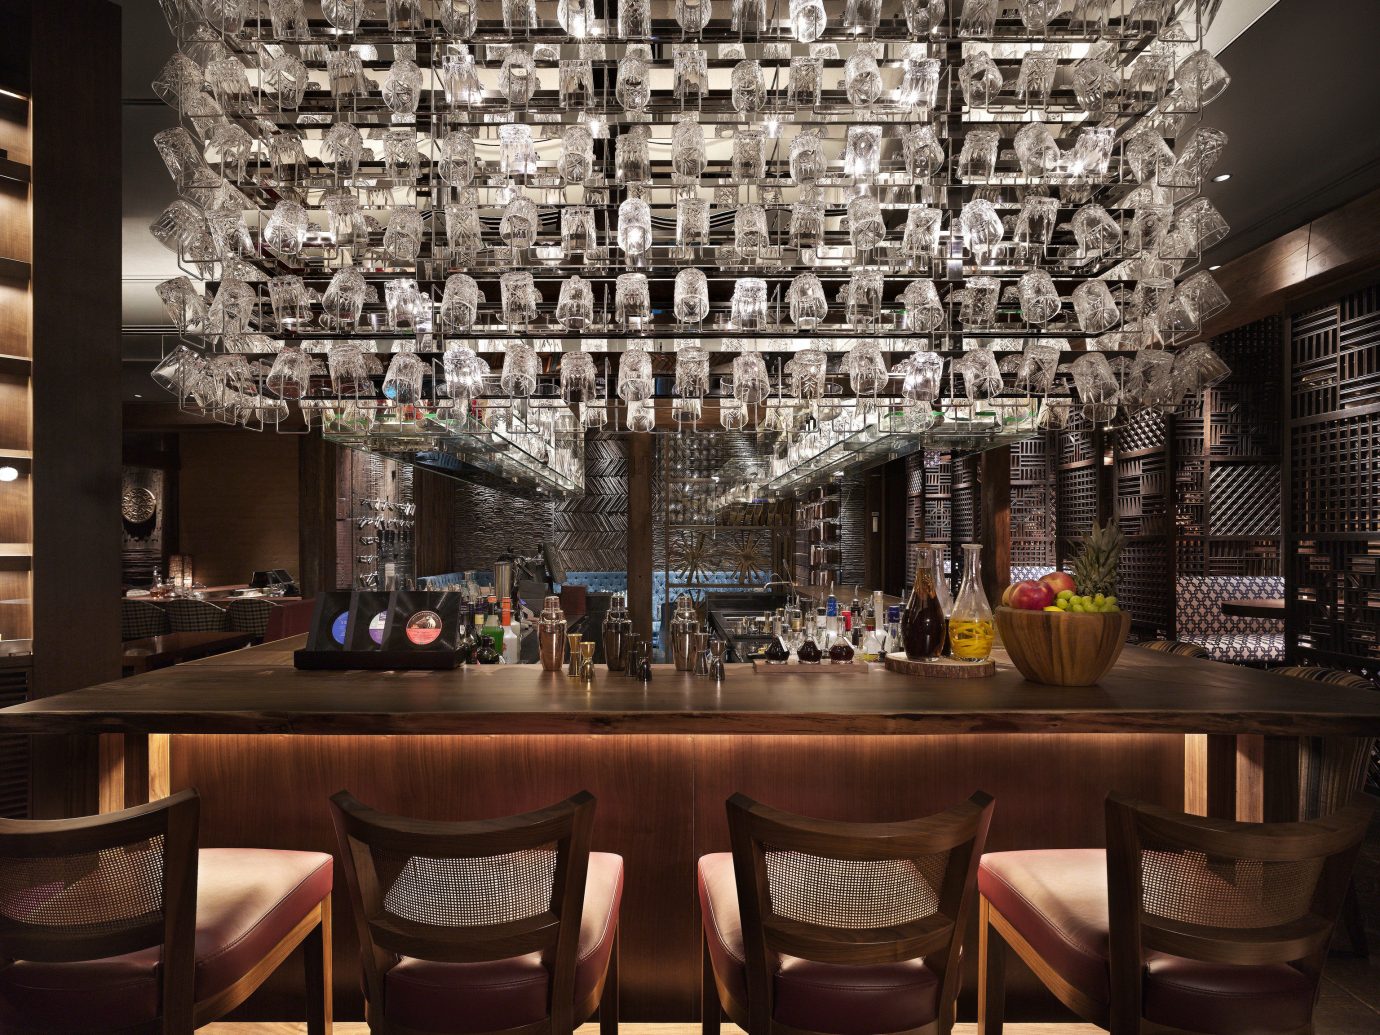 Hotels Luxury Travel indoor Bar restaurant interior design Lobby